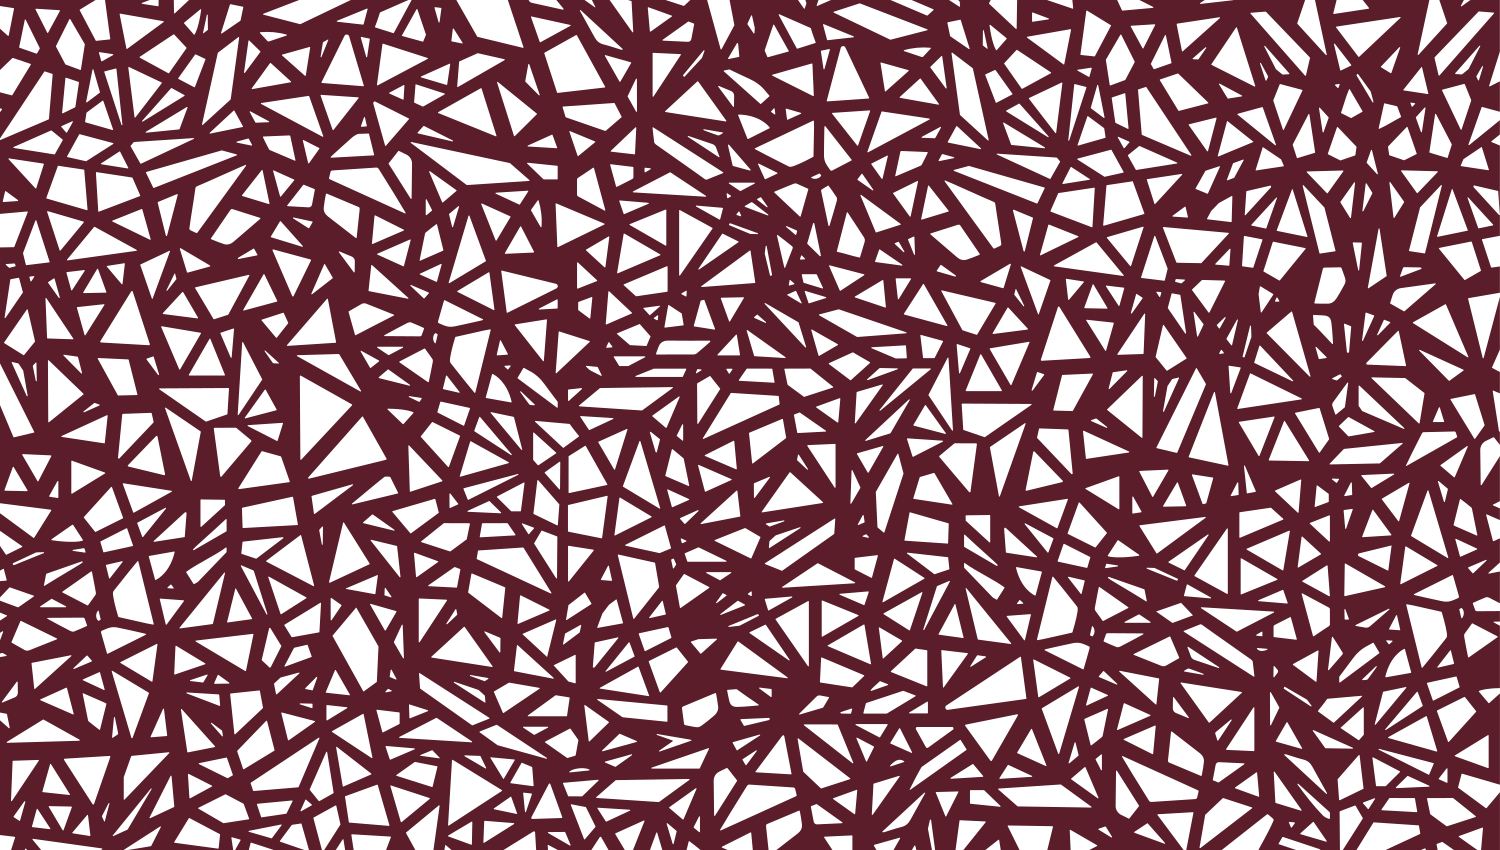 Parasoleil™ Fractal© pattern displayed with a burgundy color overlay